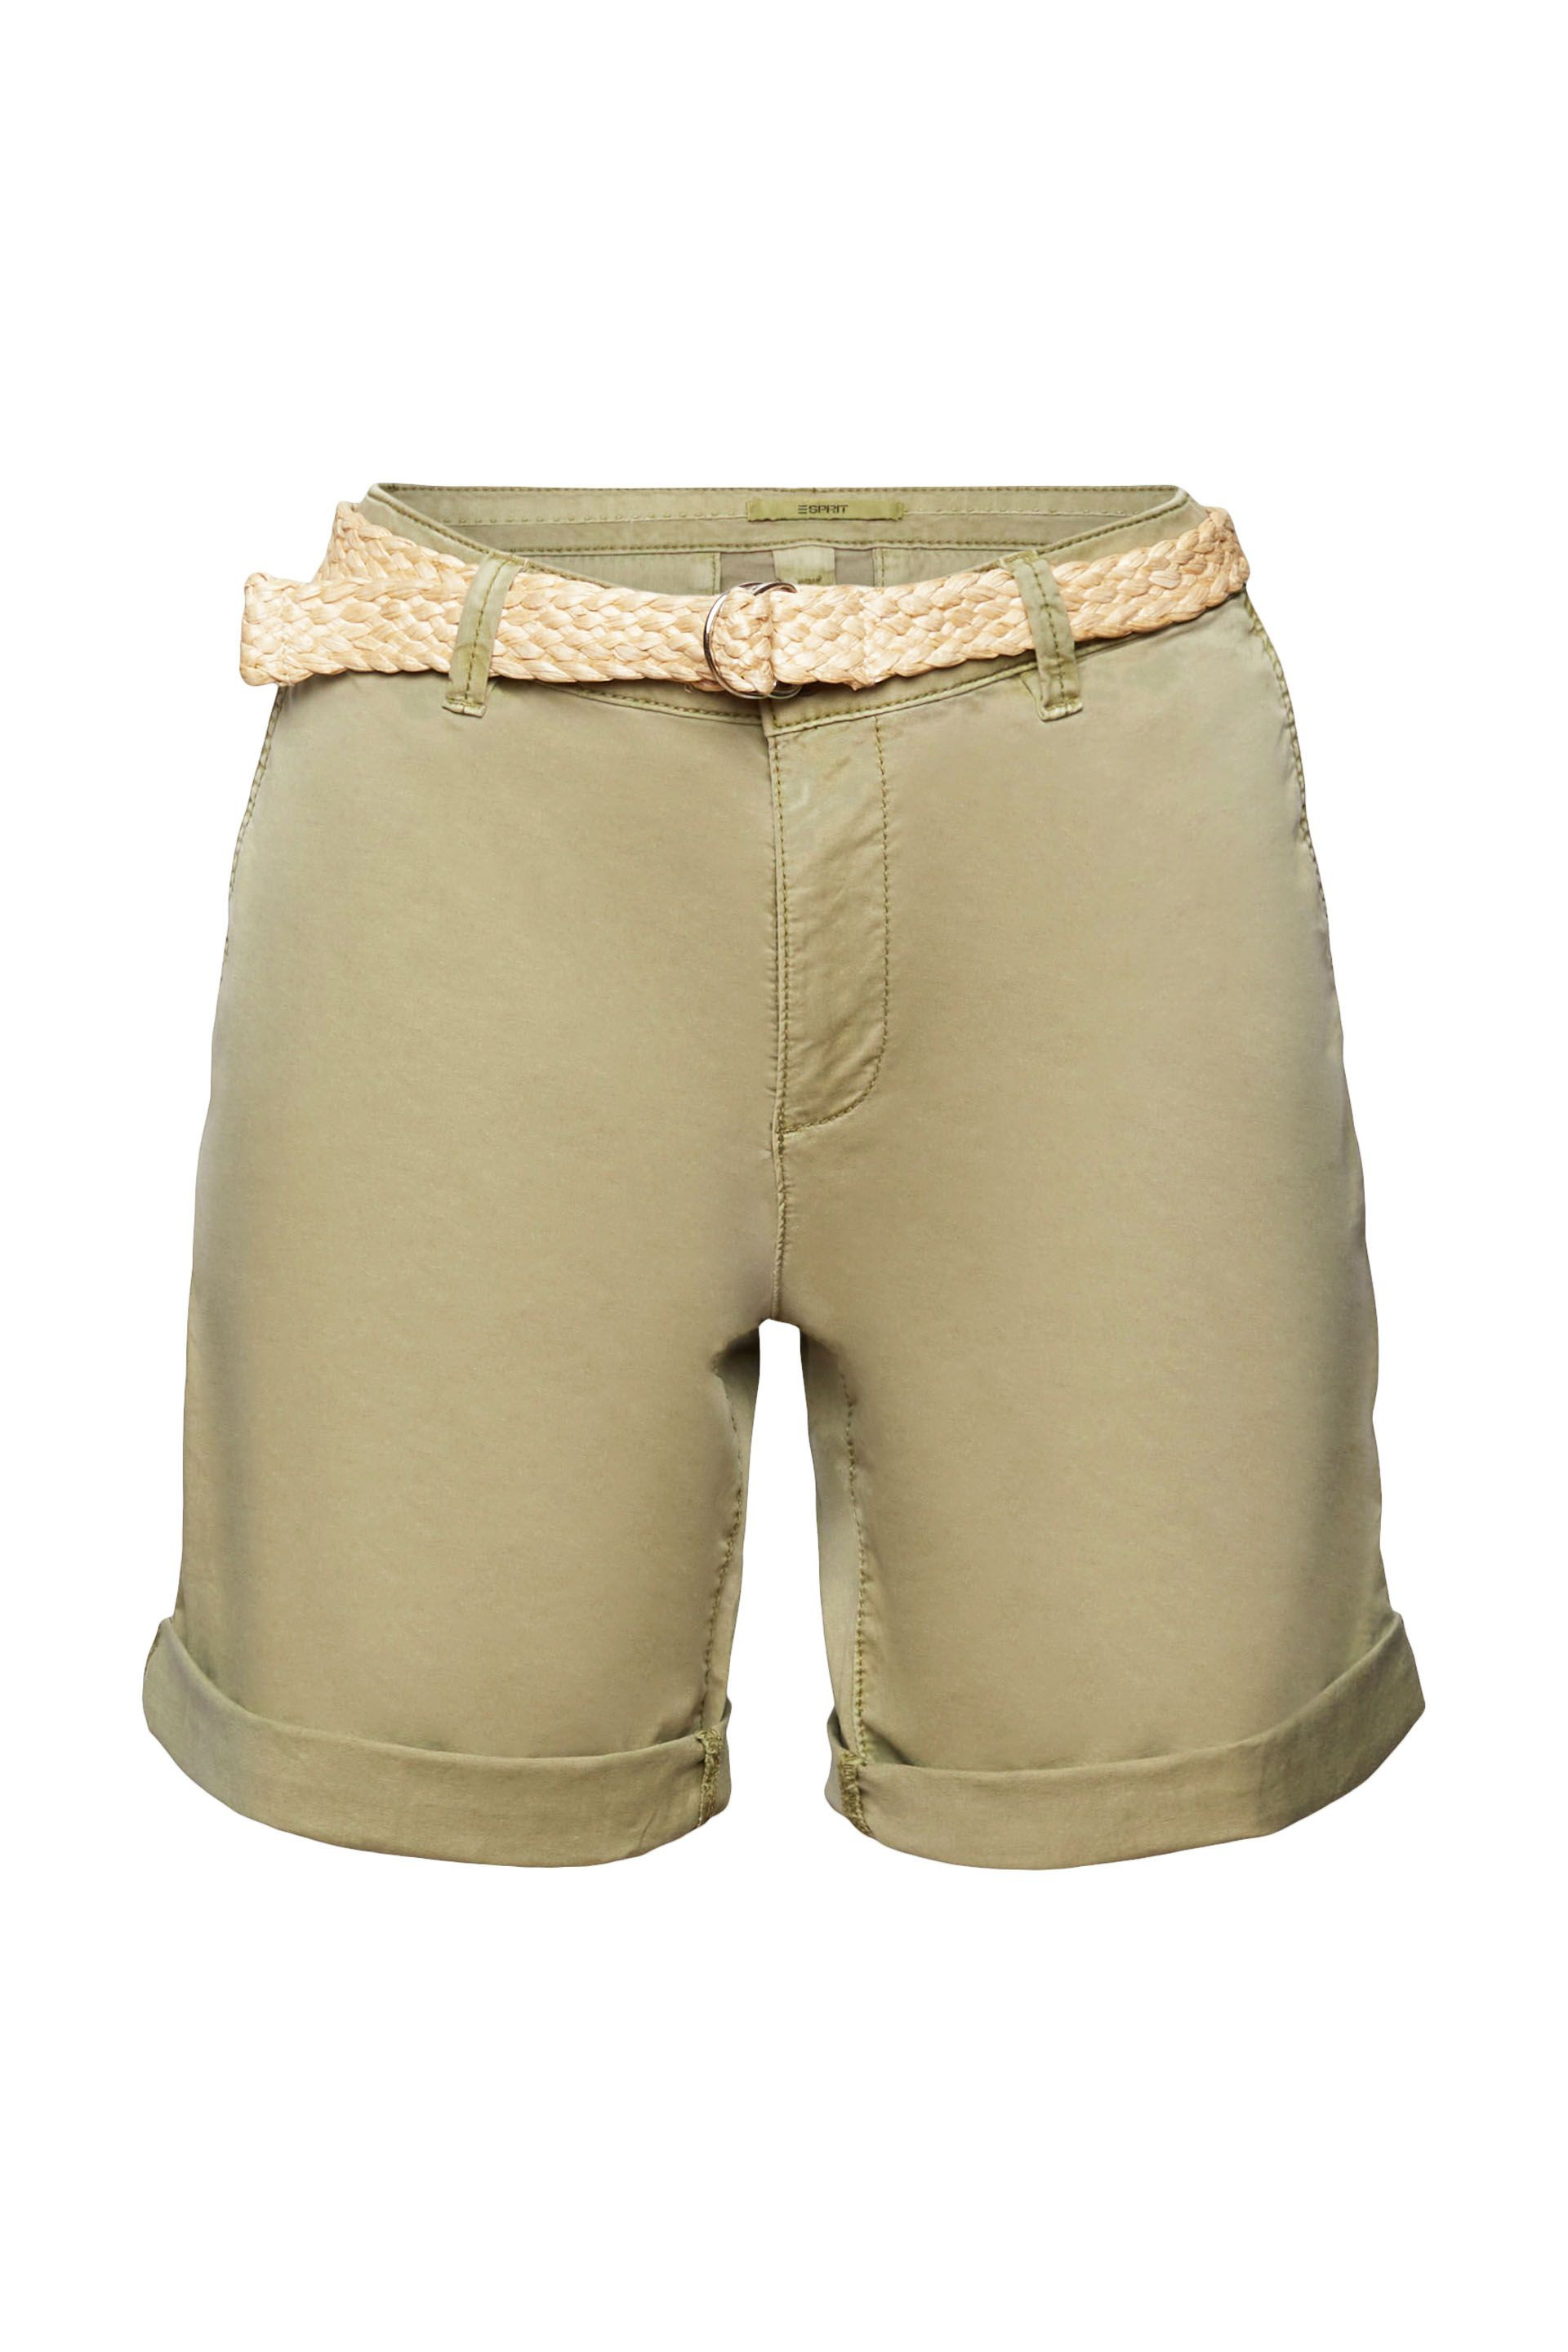 Esprit - Shorts con cintura intrecciata in rafia, Azzurro, large image number 0